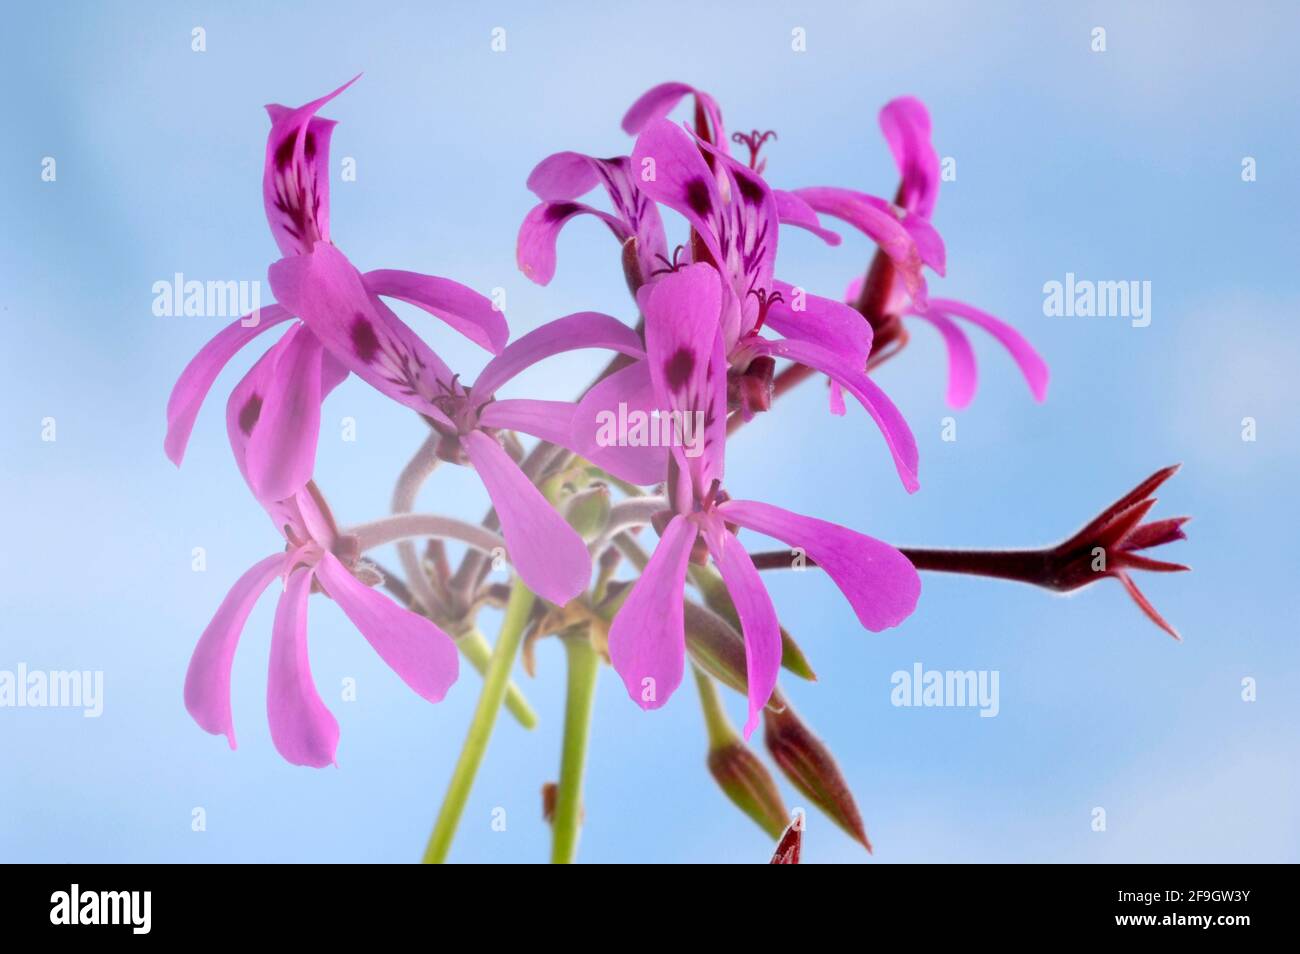 Umckaloabo blossoms (Pelargonium reniforme) (Pelargonium sinoides), Umckaloabo blossoms, indoor, Studio, Geraniaceae family (Geraniaceae) Stock Photo